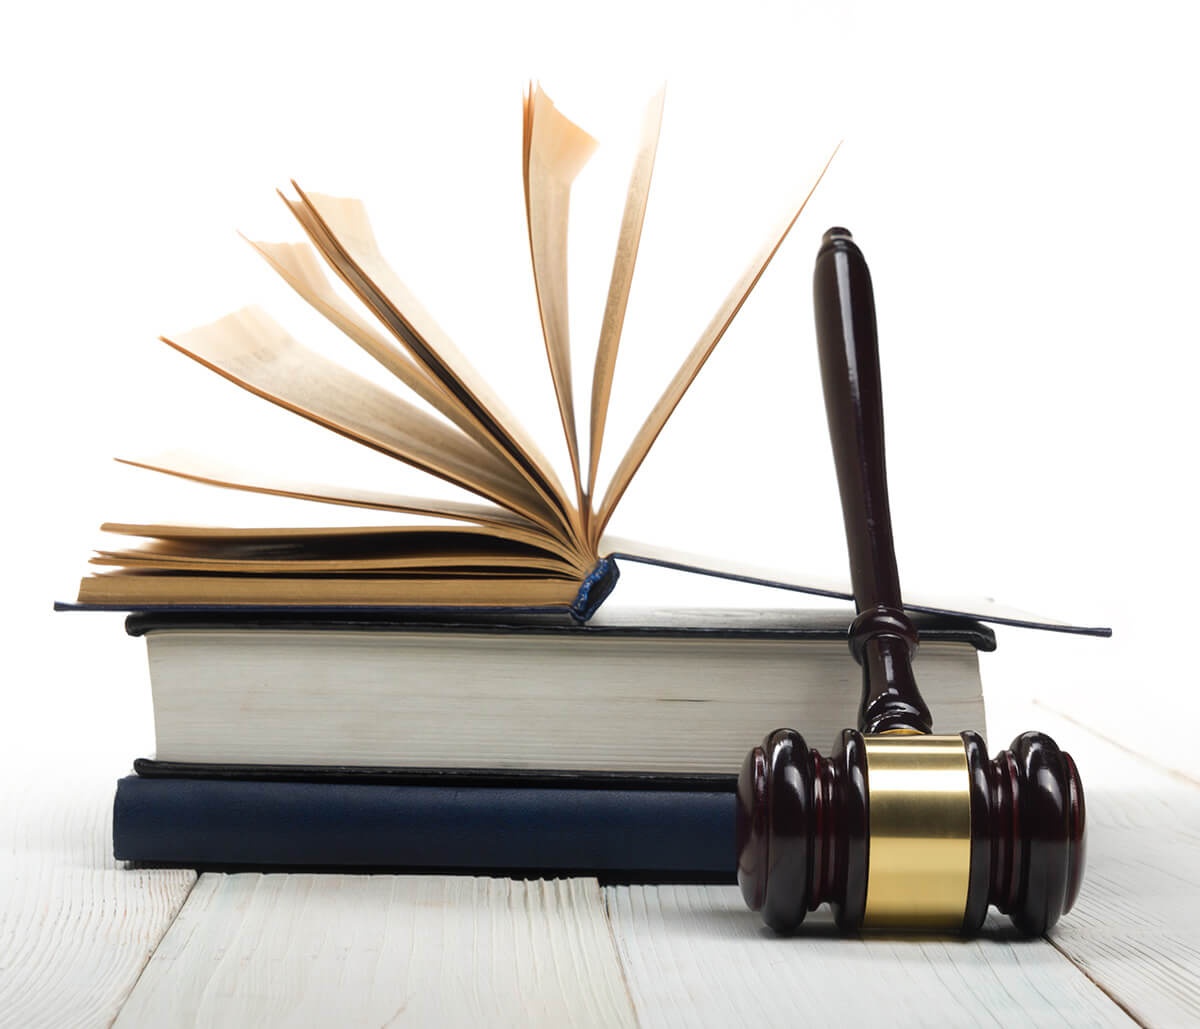 Civil Litigation Lawyer in Ontario Area